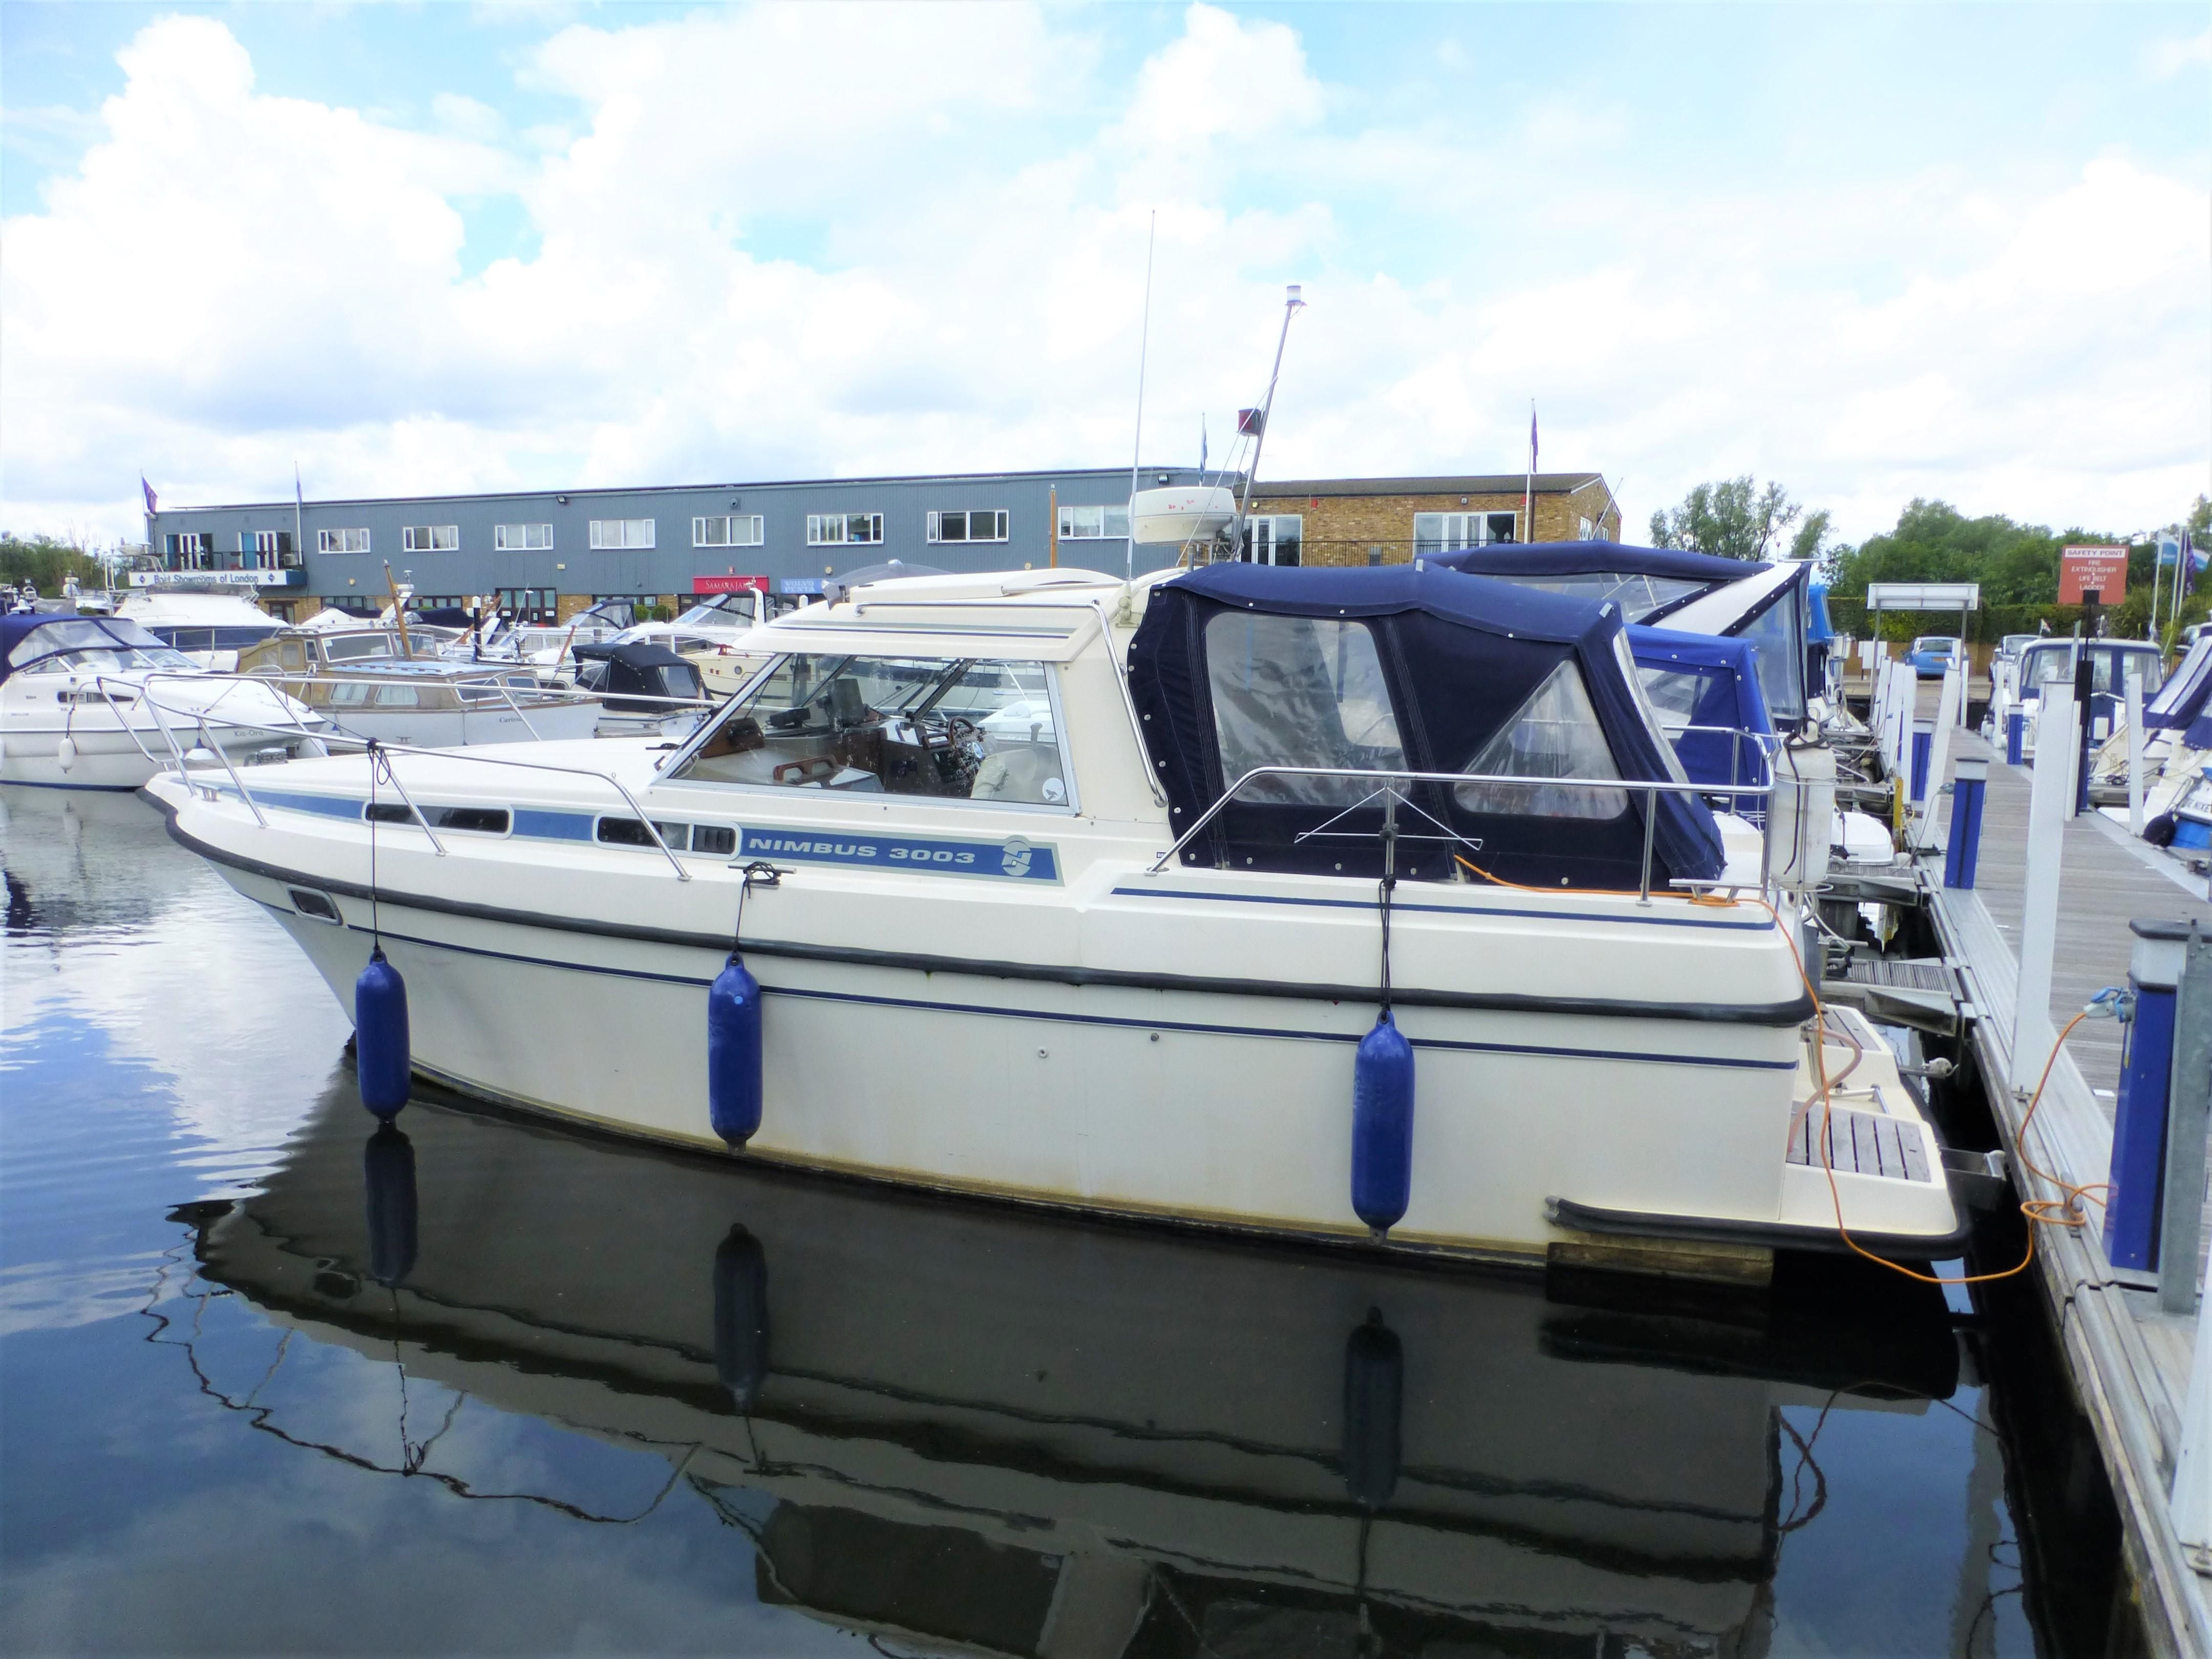 nimbus yachts for sale uk